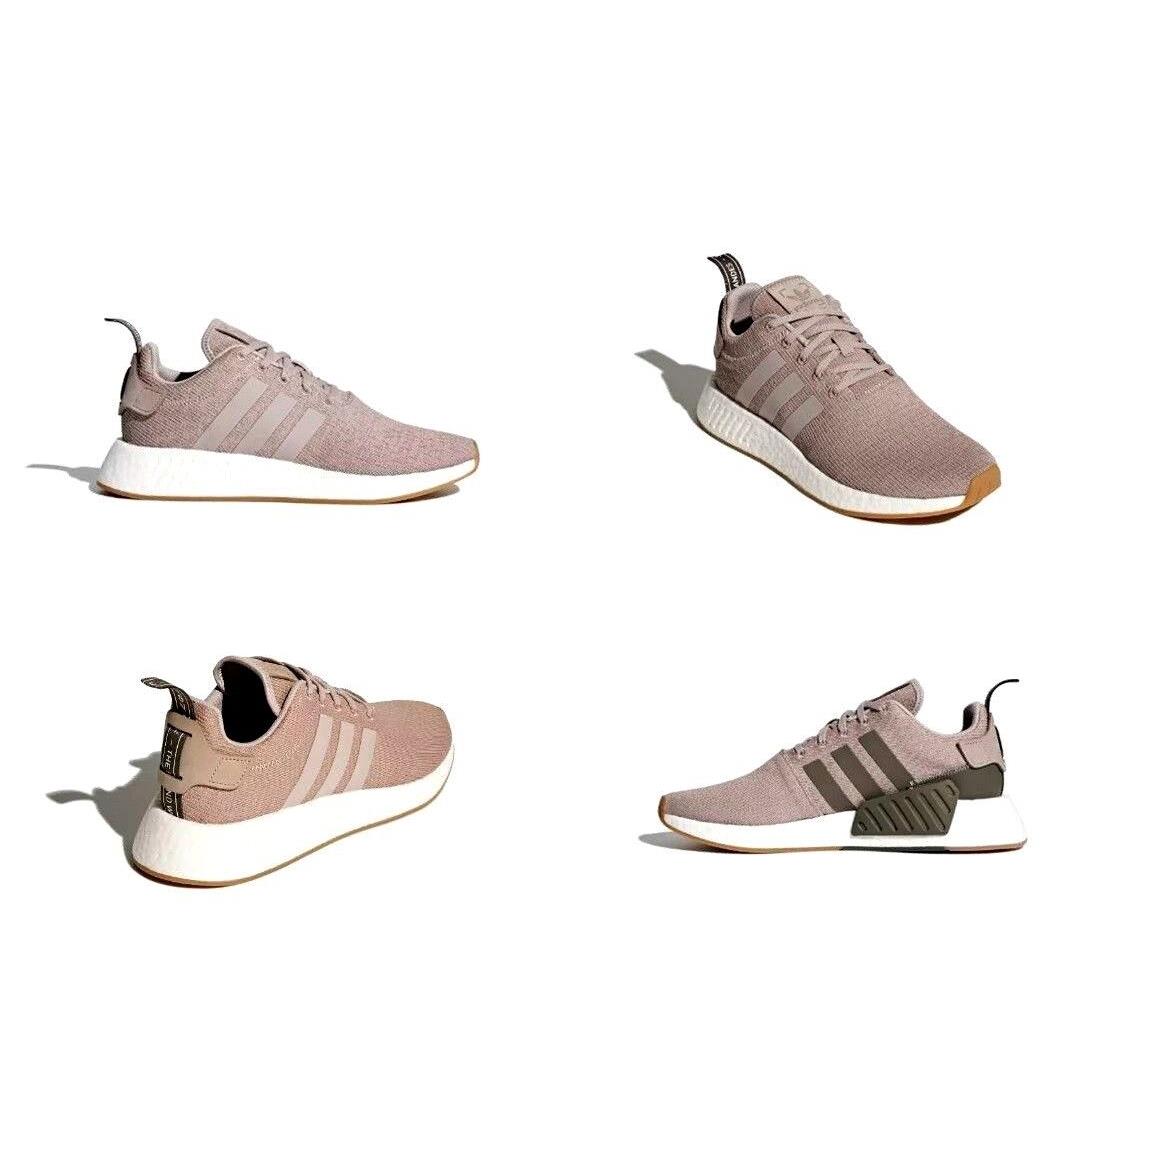 Adidas NMD_R2 Running Grey / Grey / Brown Mens Shoes CQ2399 Size 9 US